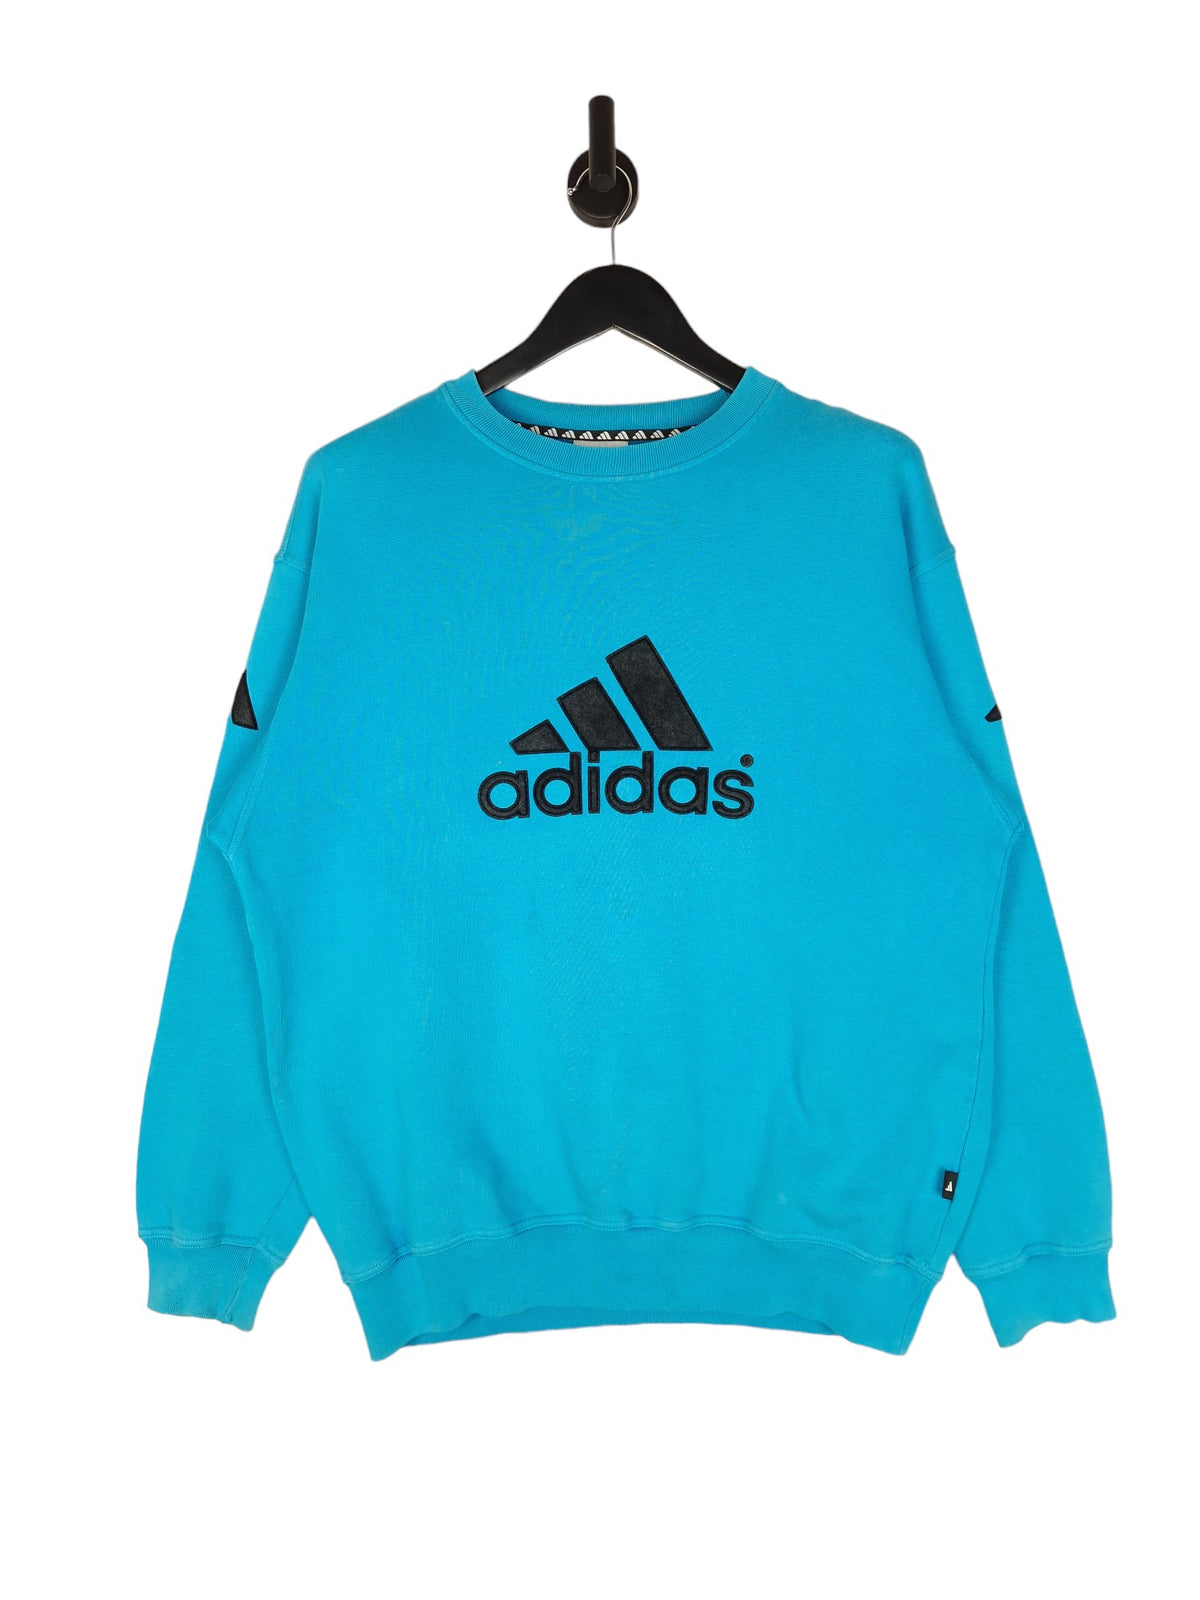 90's Adidas Sweatshirt - Size M/L